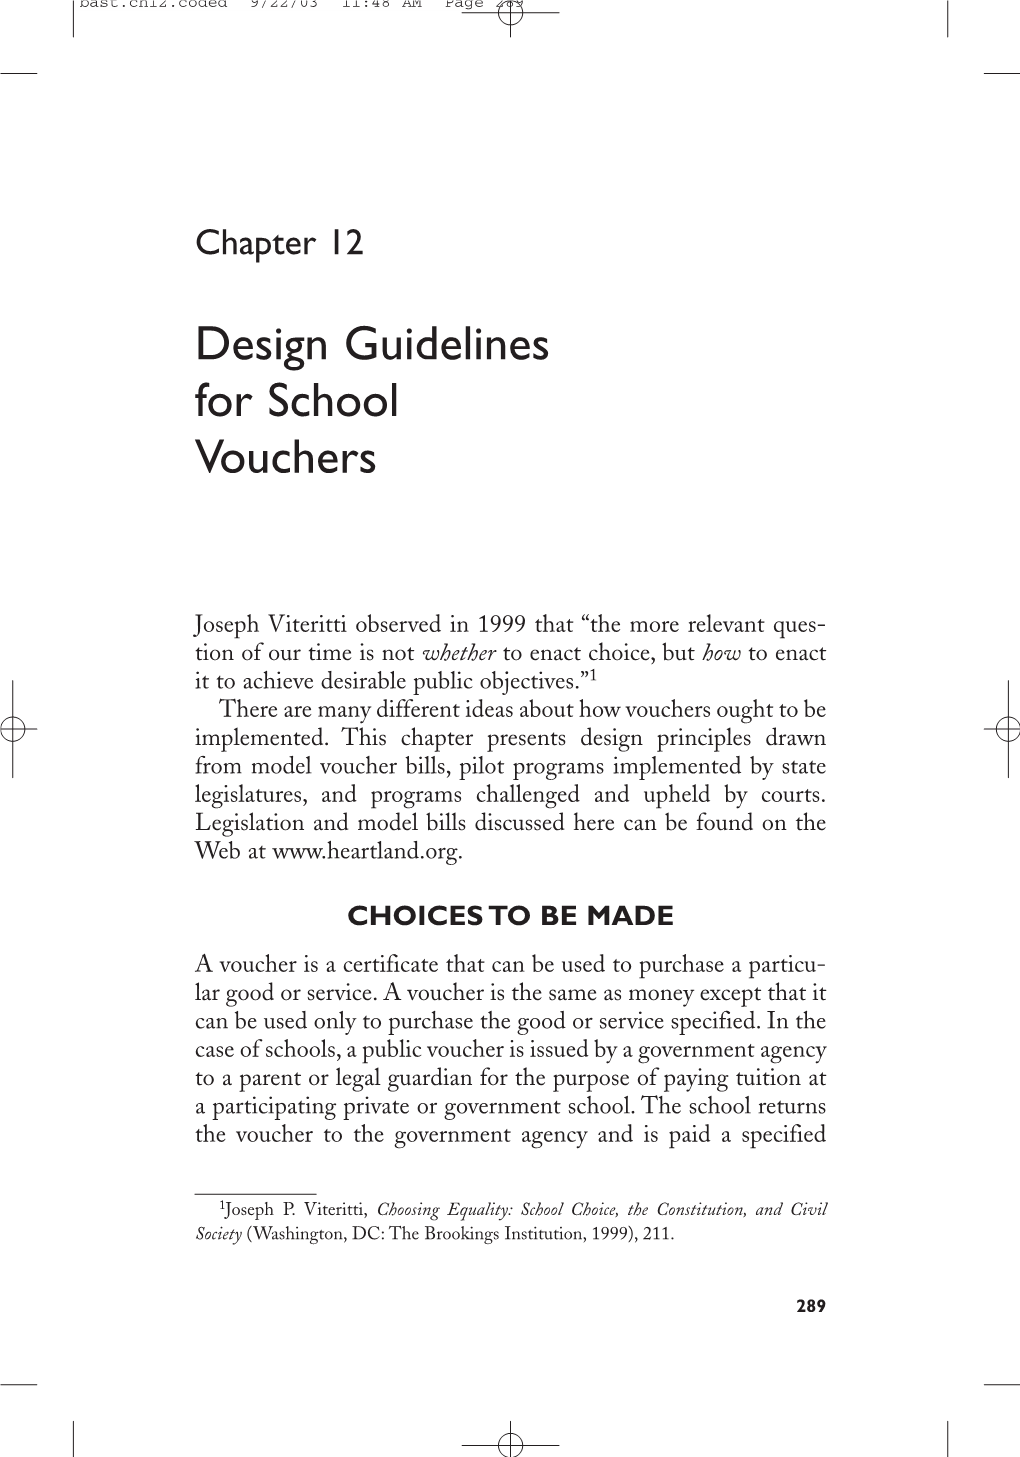 Design Guidelines for School Vouchers